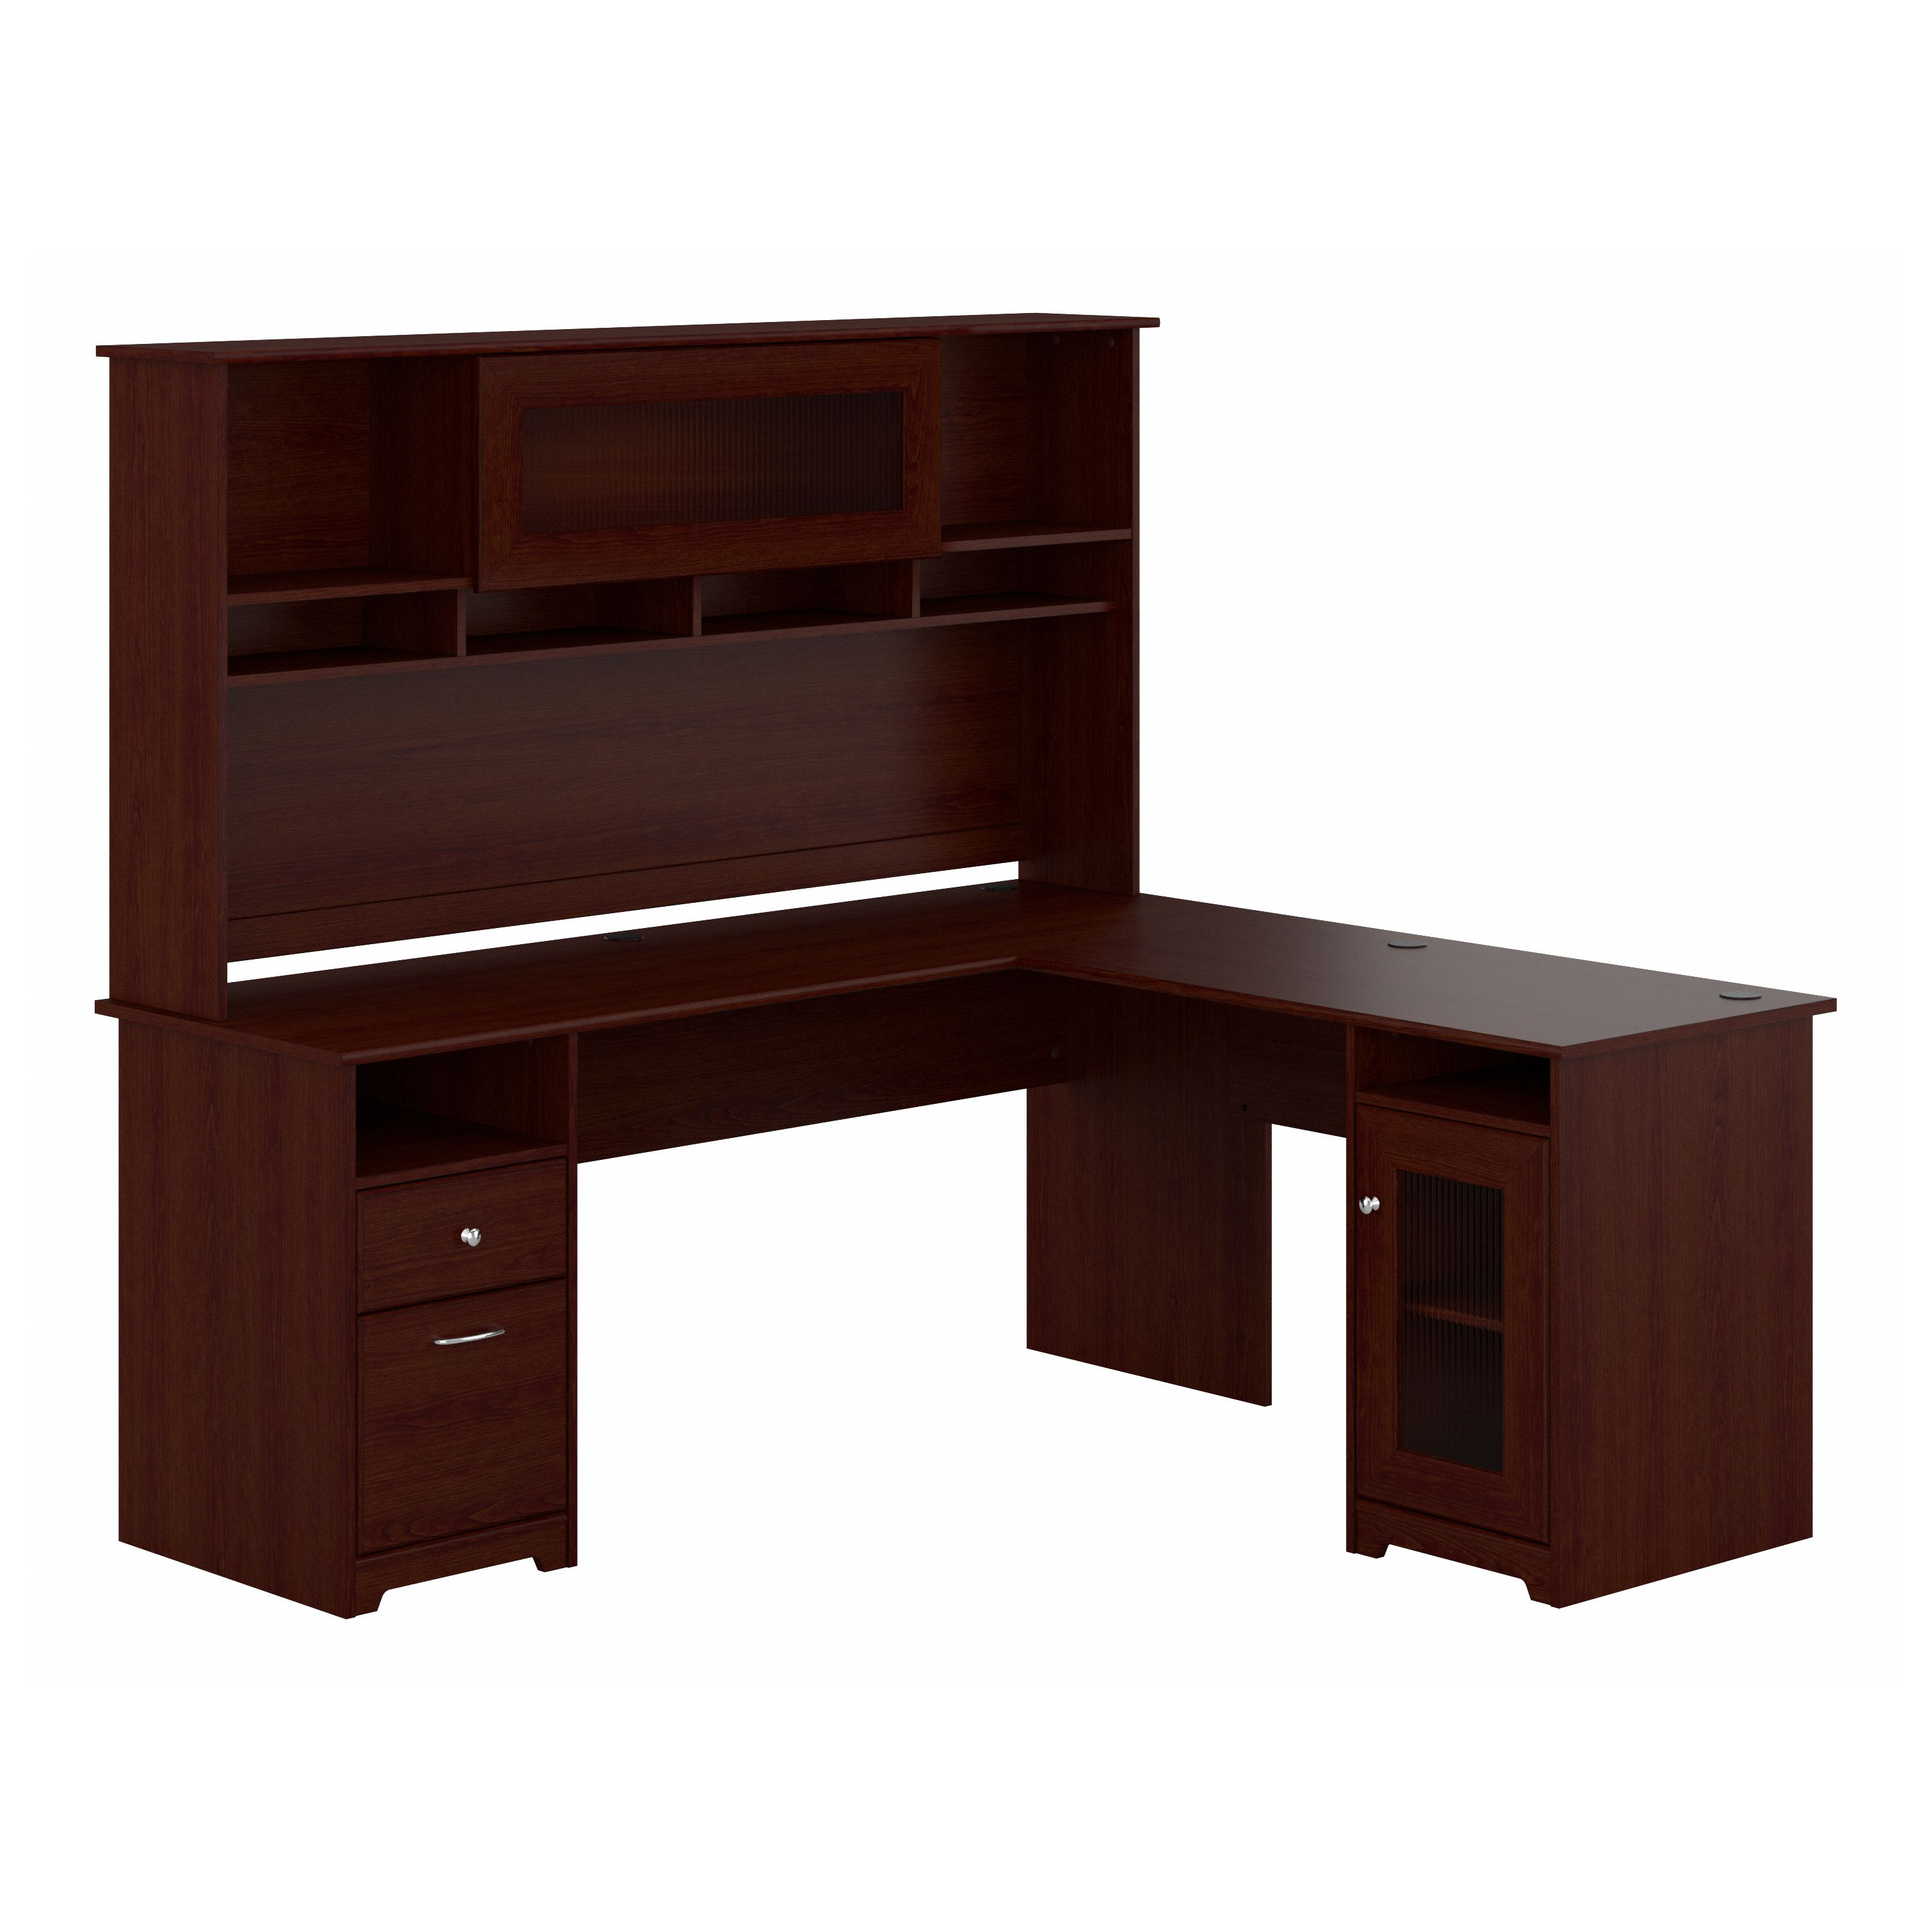 Shop Bush Furniture Cabot 72W L Shaped Computer Desk with Hutch and Storage 02 CAB073HVC #color_harvest cherry